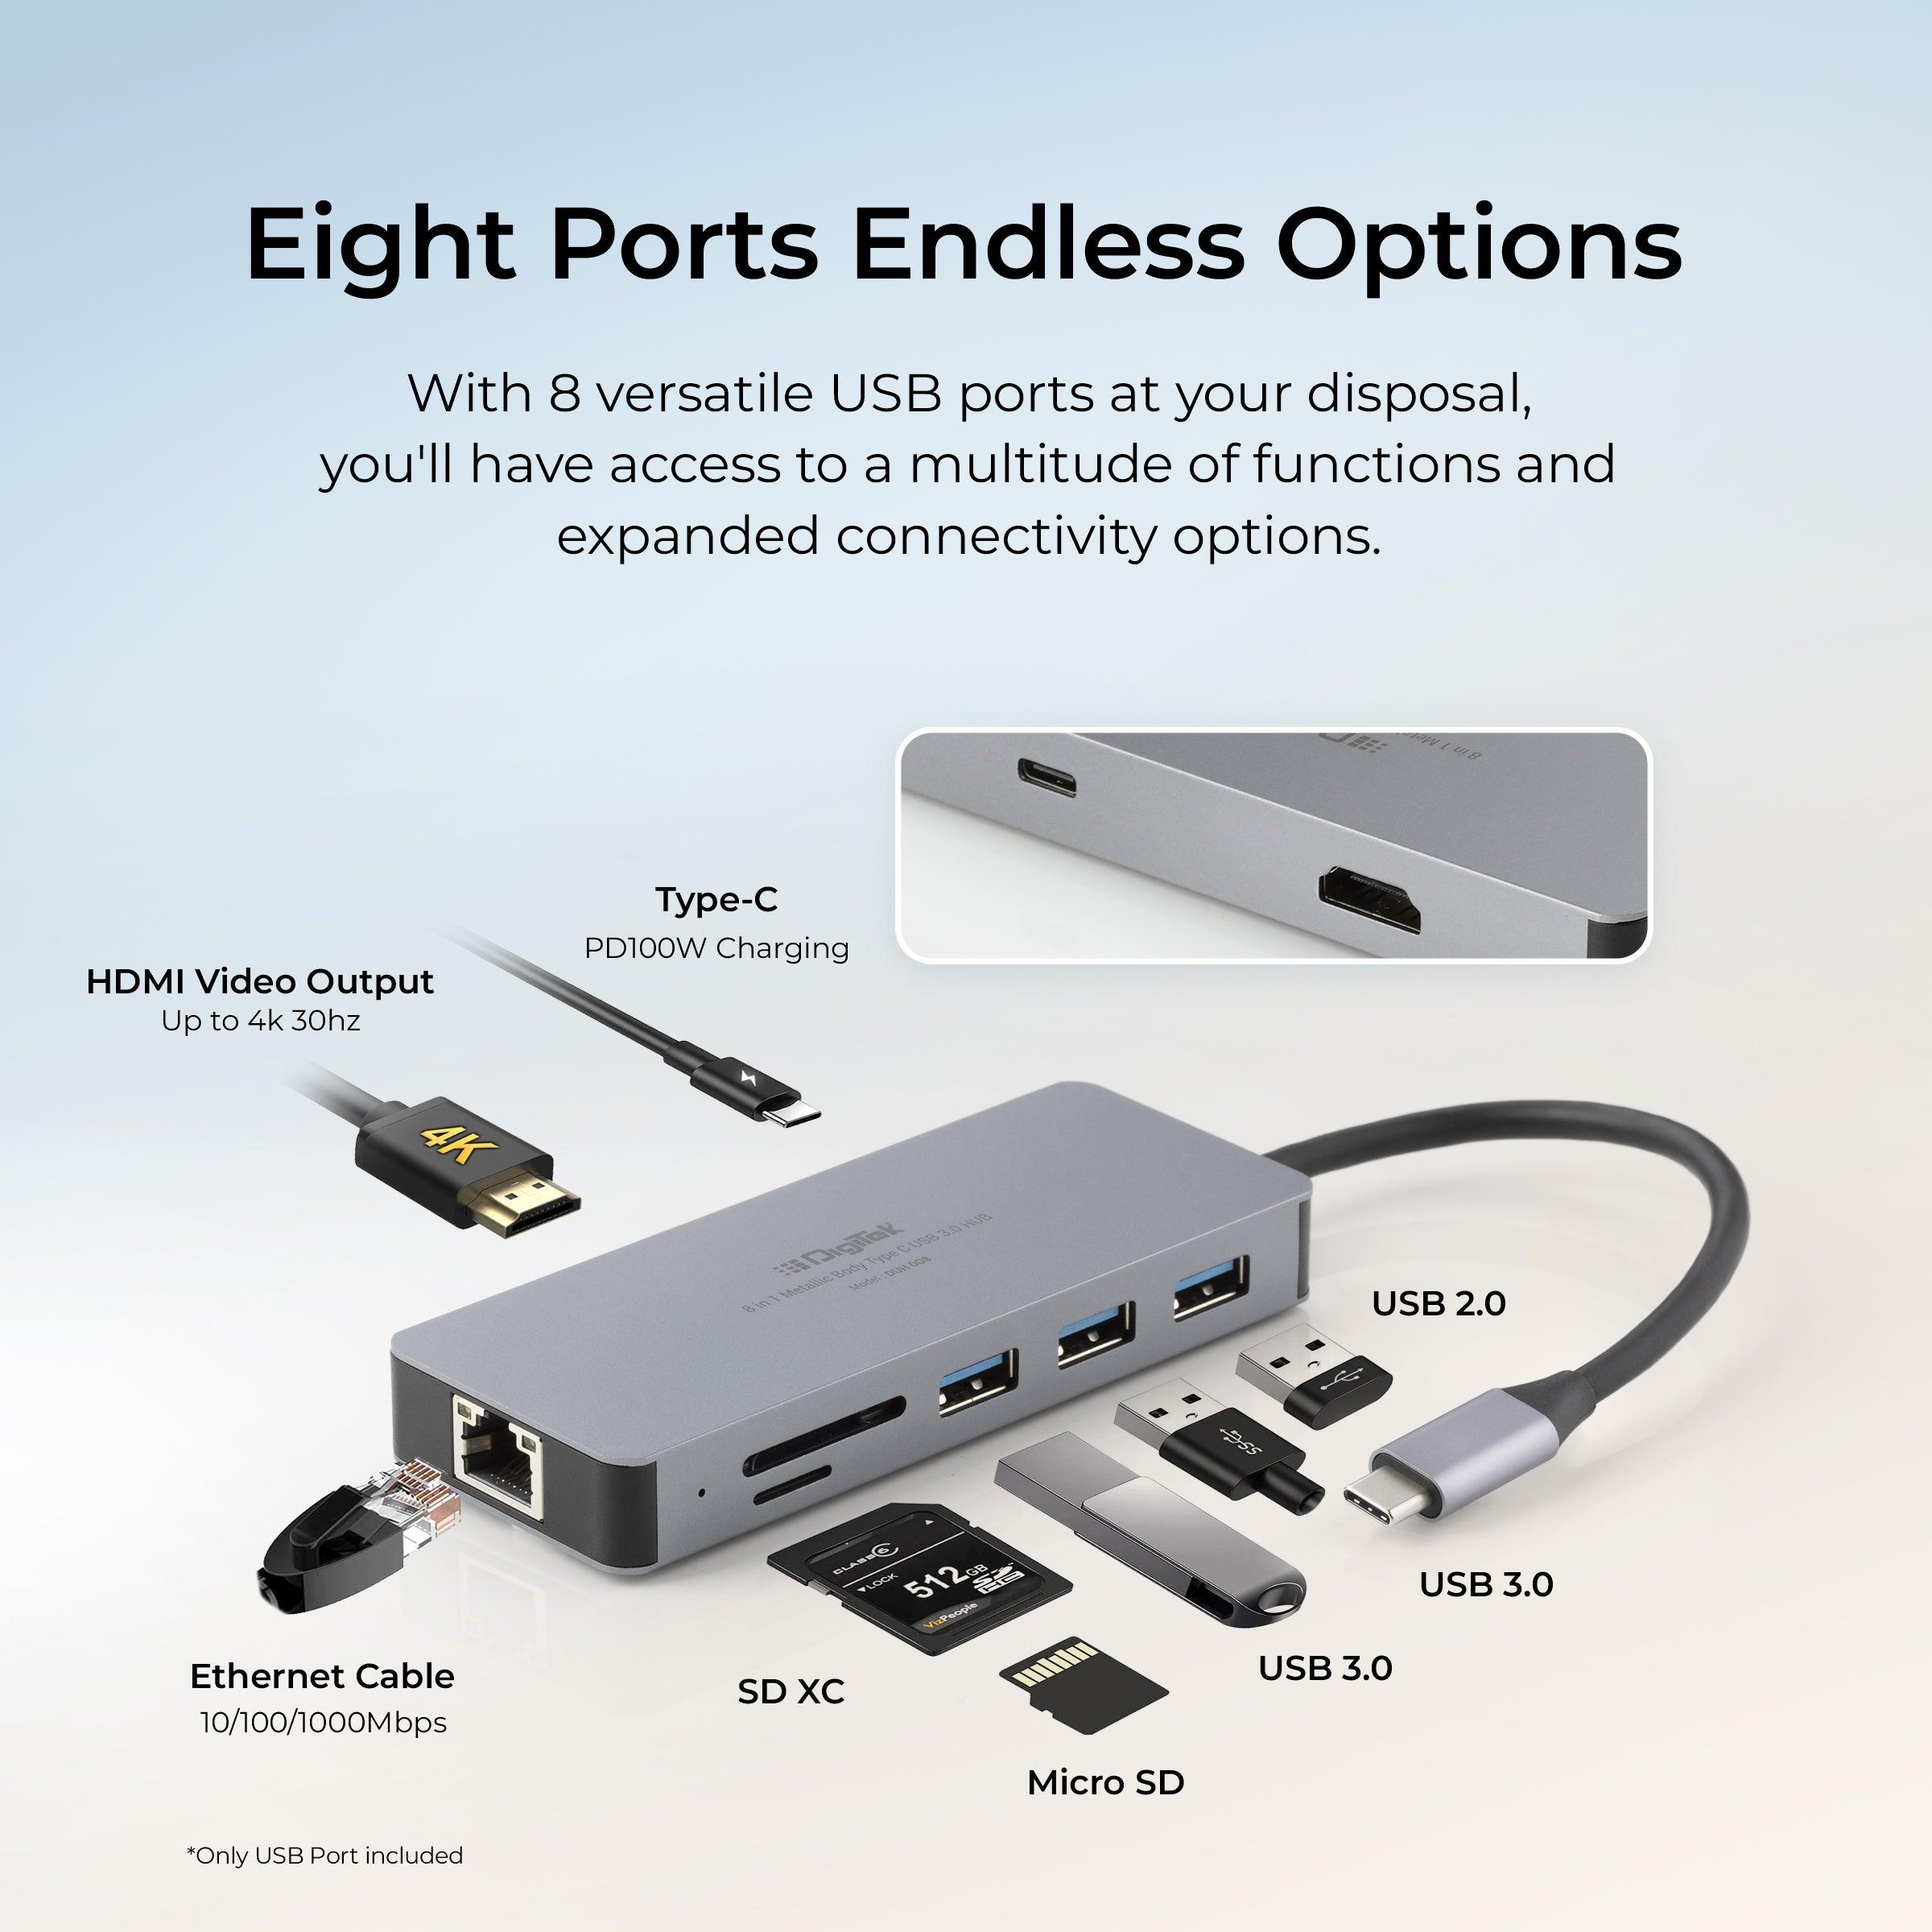 Digitek (DUH 008) USB C Type HUB 8 in 1 Adapter, Aluminium Multi Port Dongle Type-C to Ethernet,USB 3.0, 4K HDMI, PD 3.0 Charging Port, SD/TF Reader